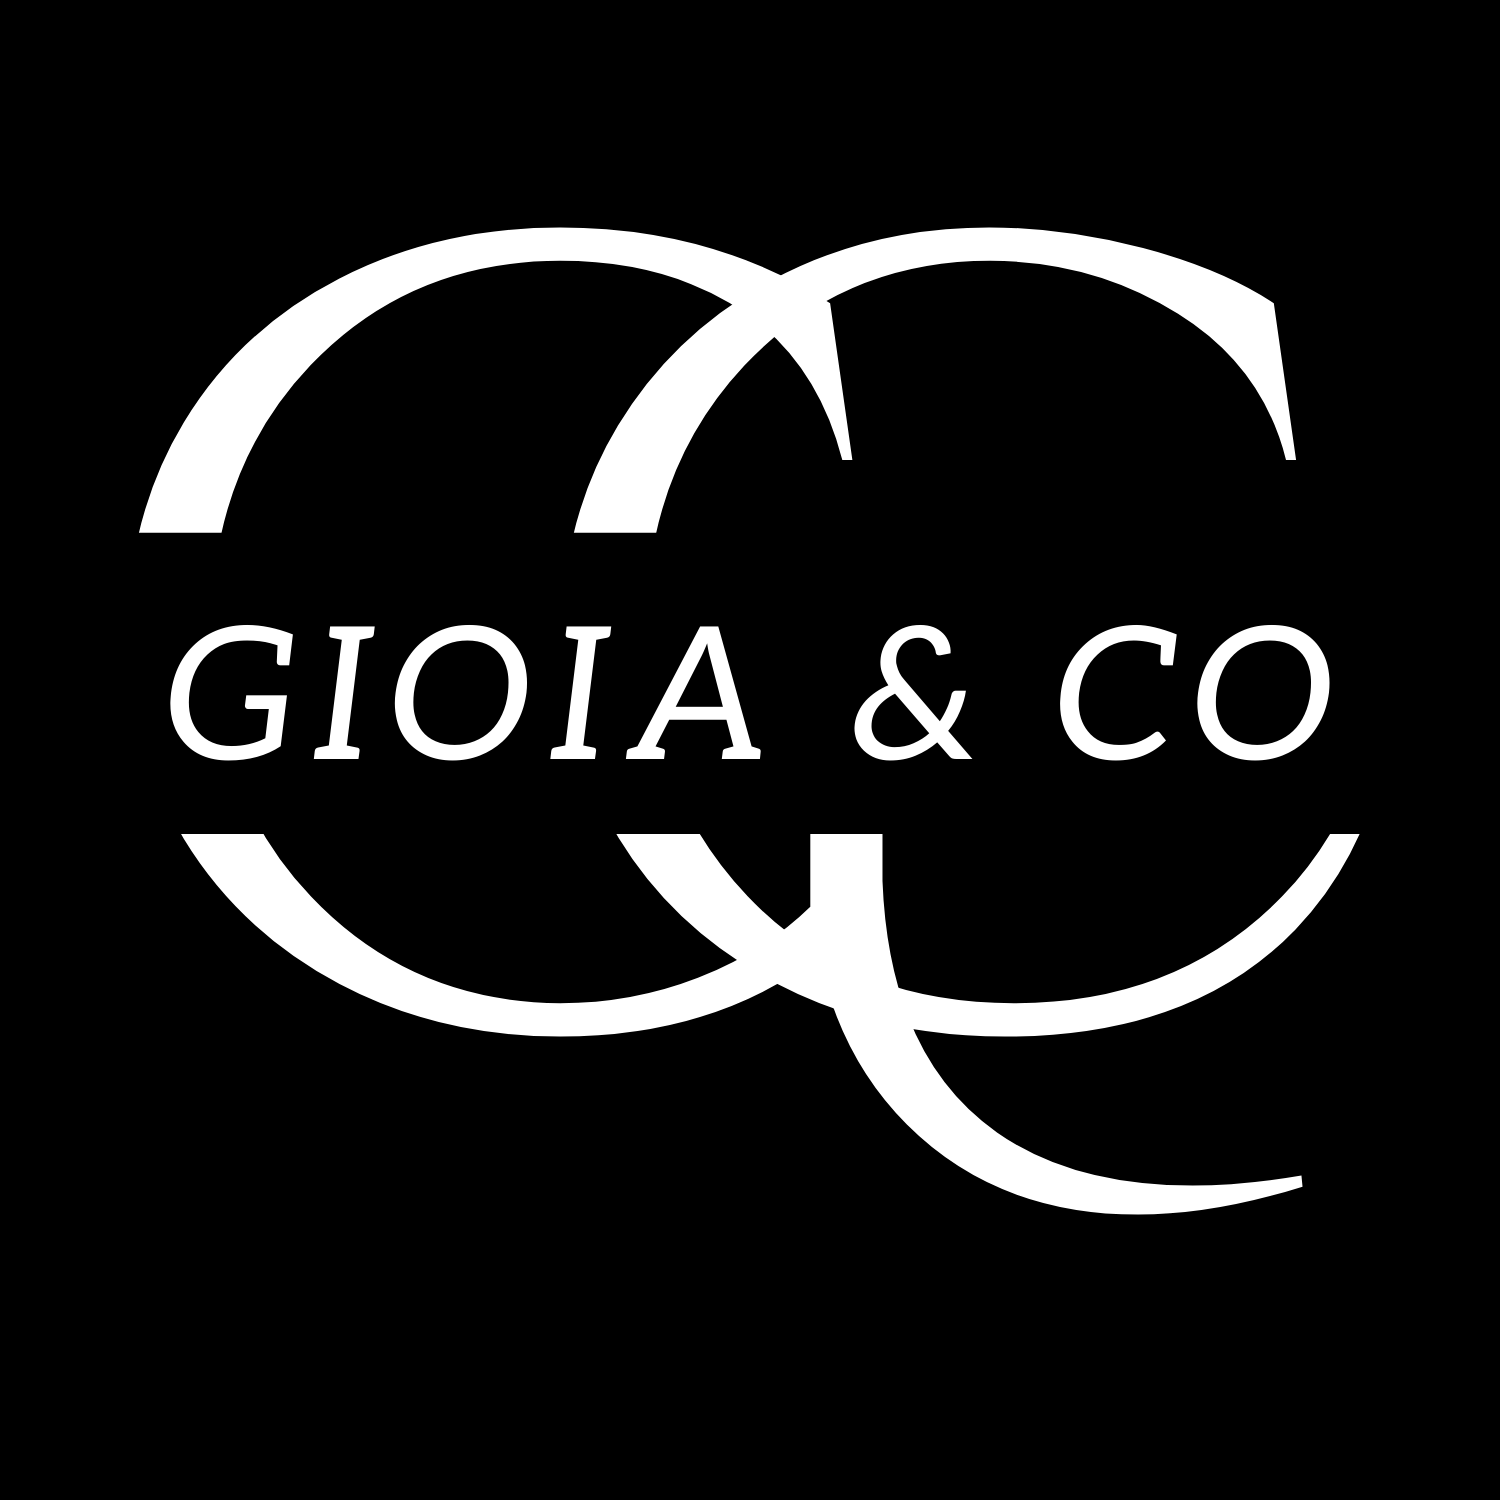 Gioia & Co. Estate Management Services